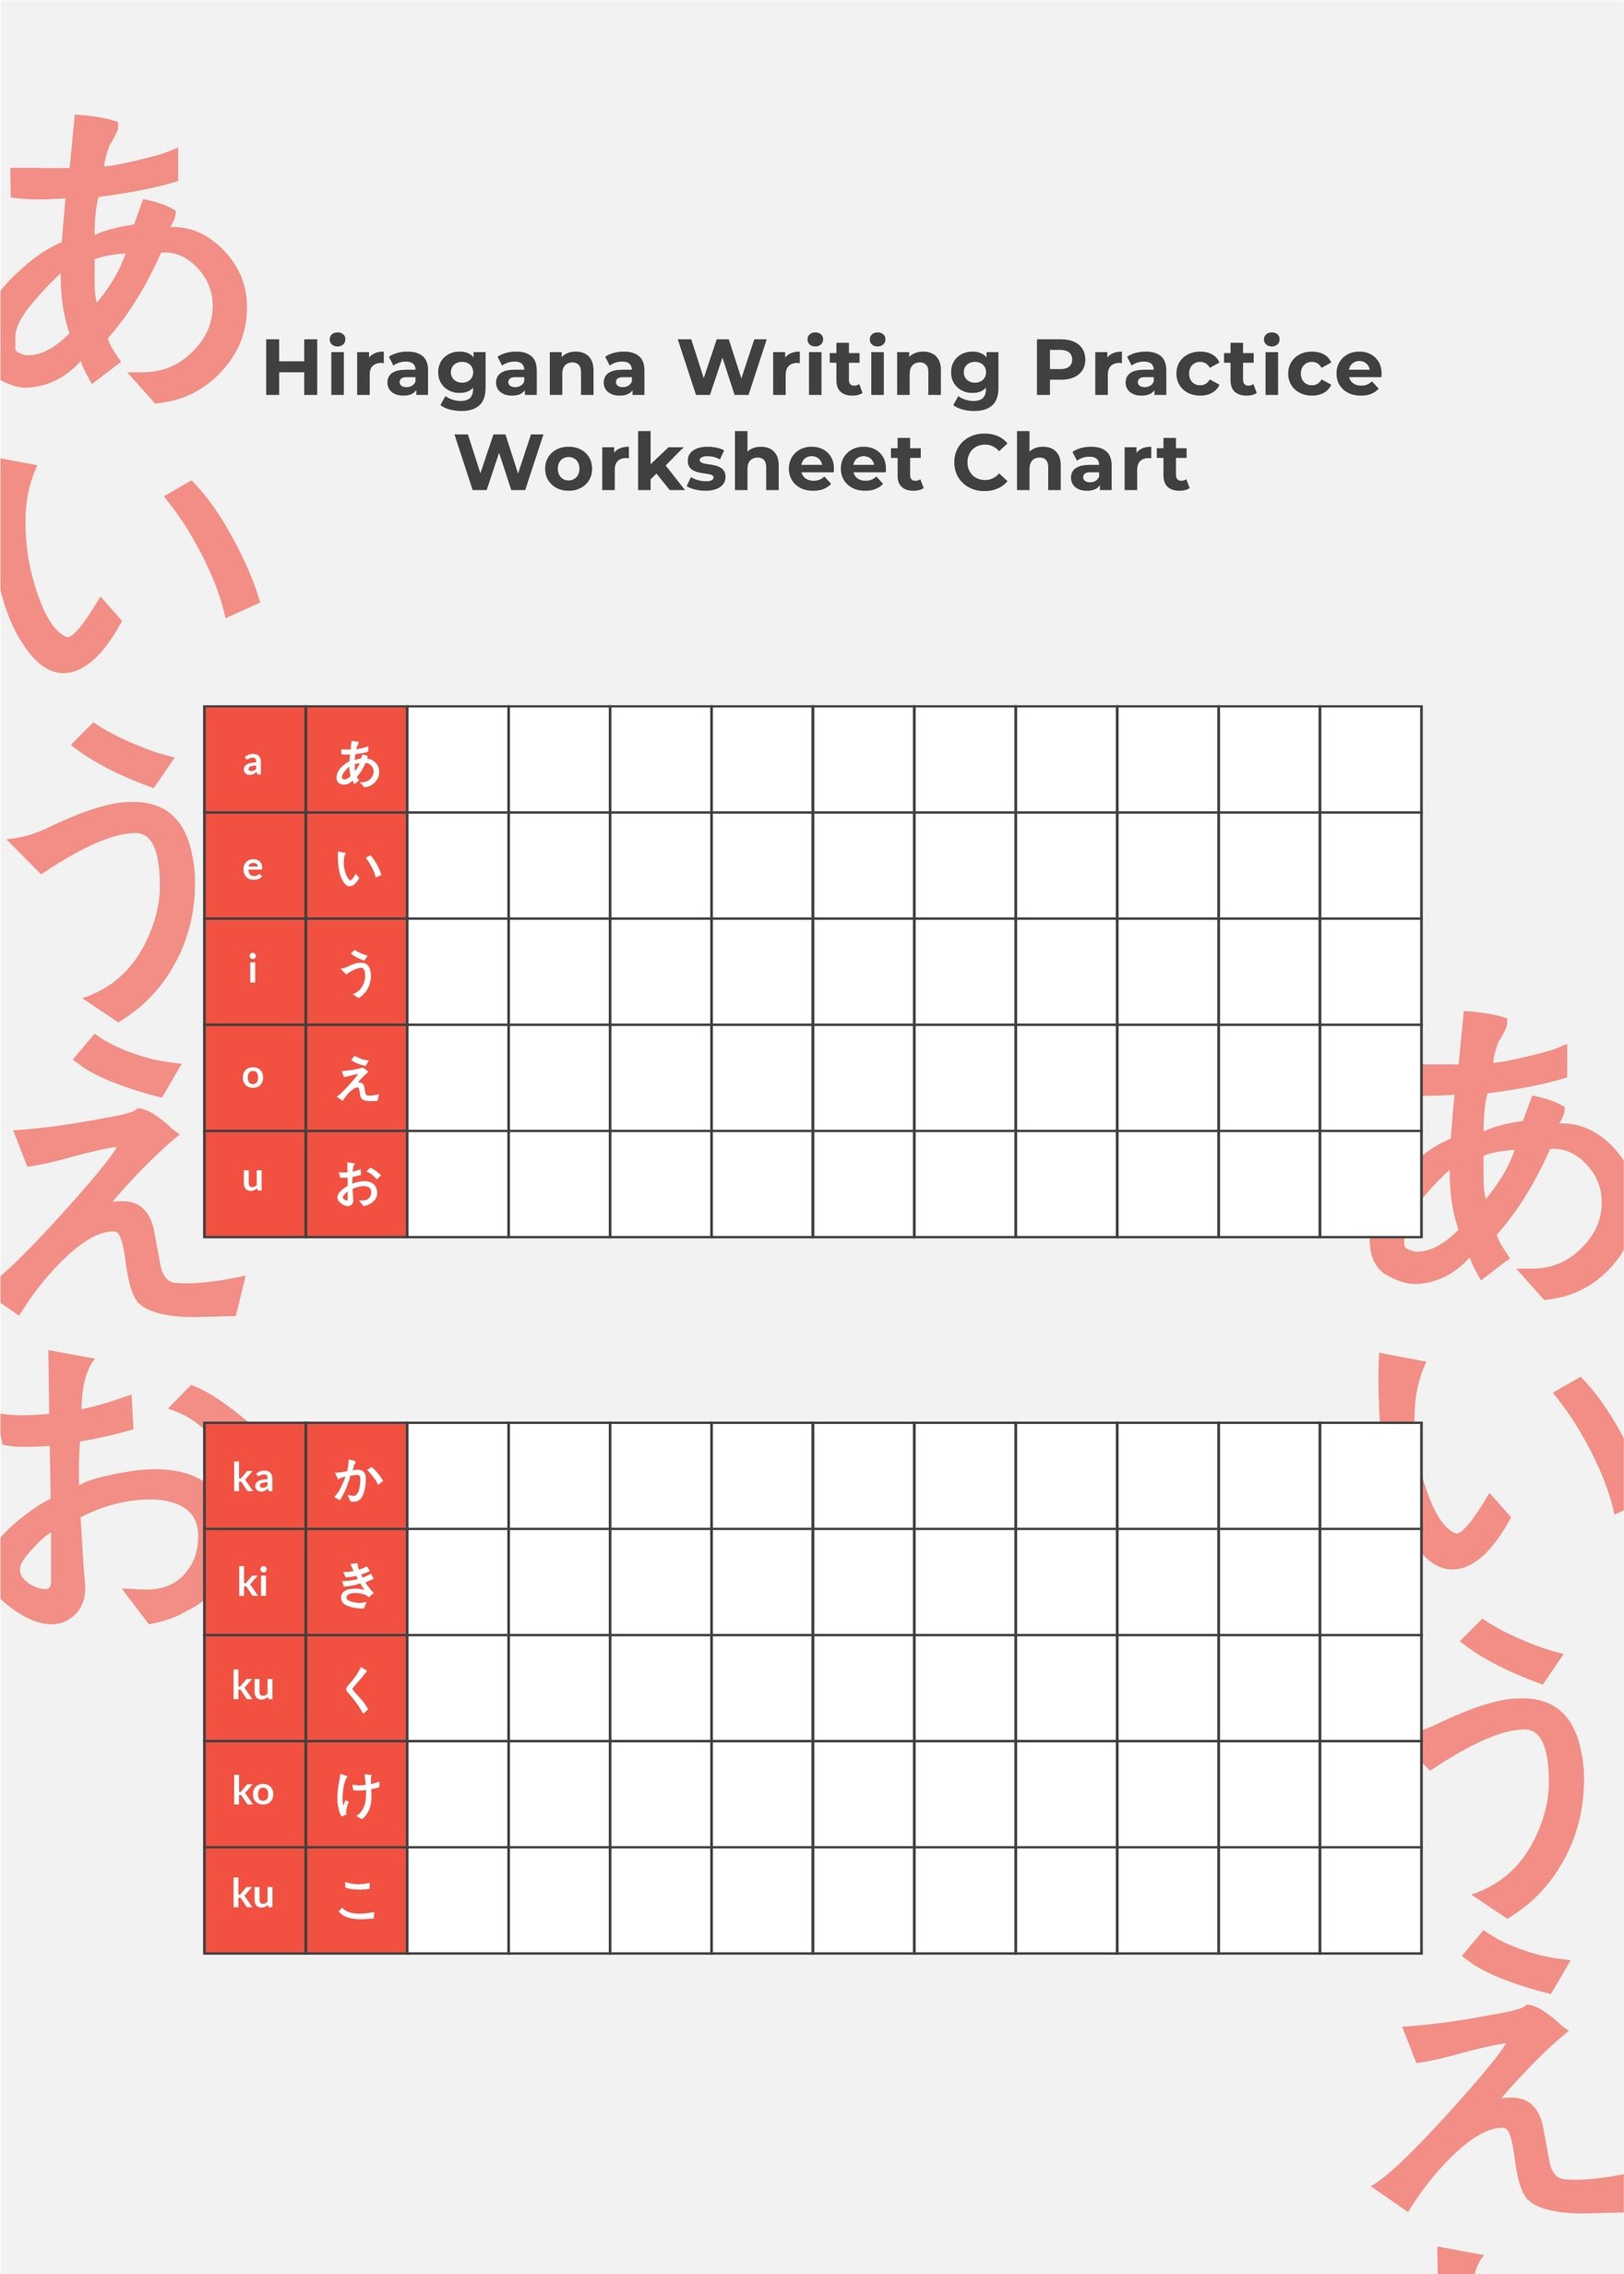 Hiragana Writing Practice Worksheet Chart